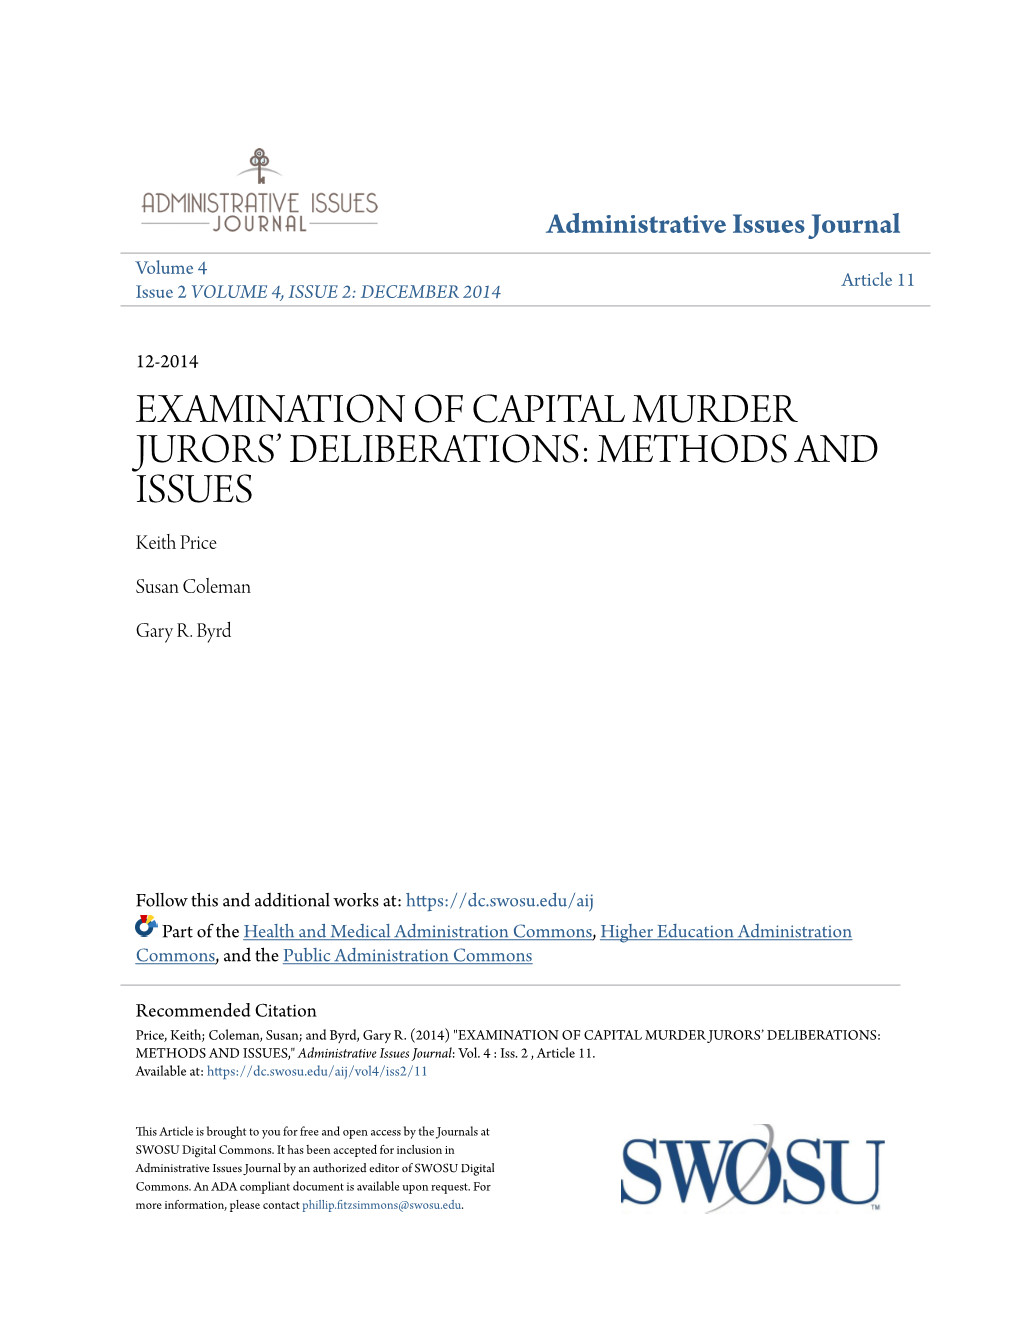 Examination of Capital Murder Jurors' Deliberations